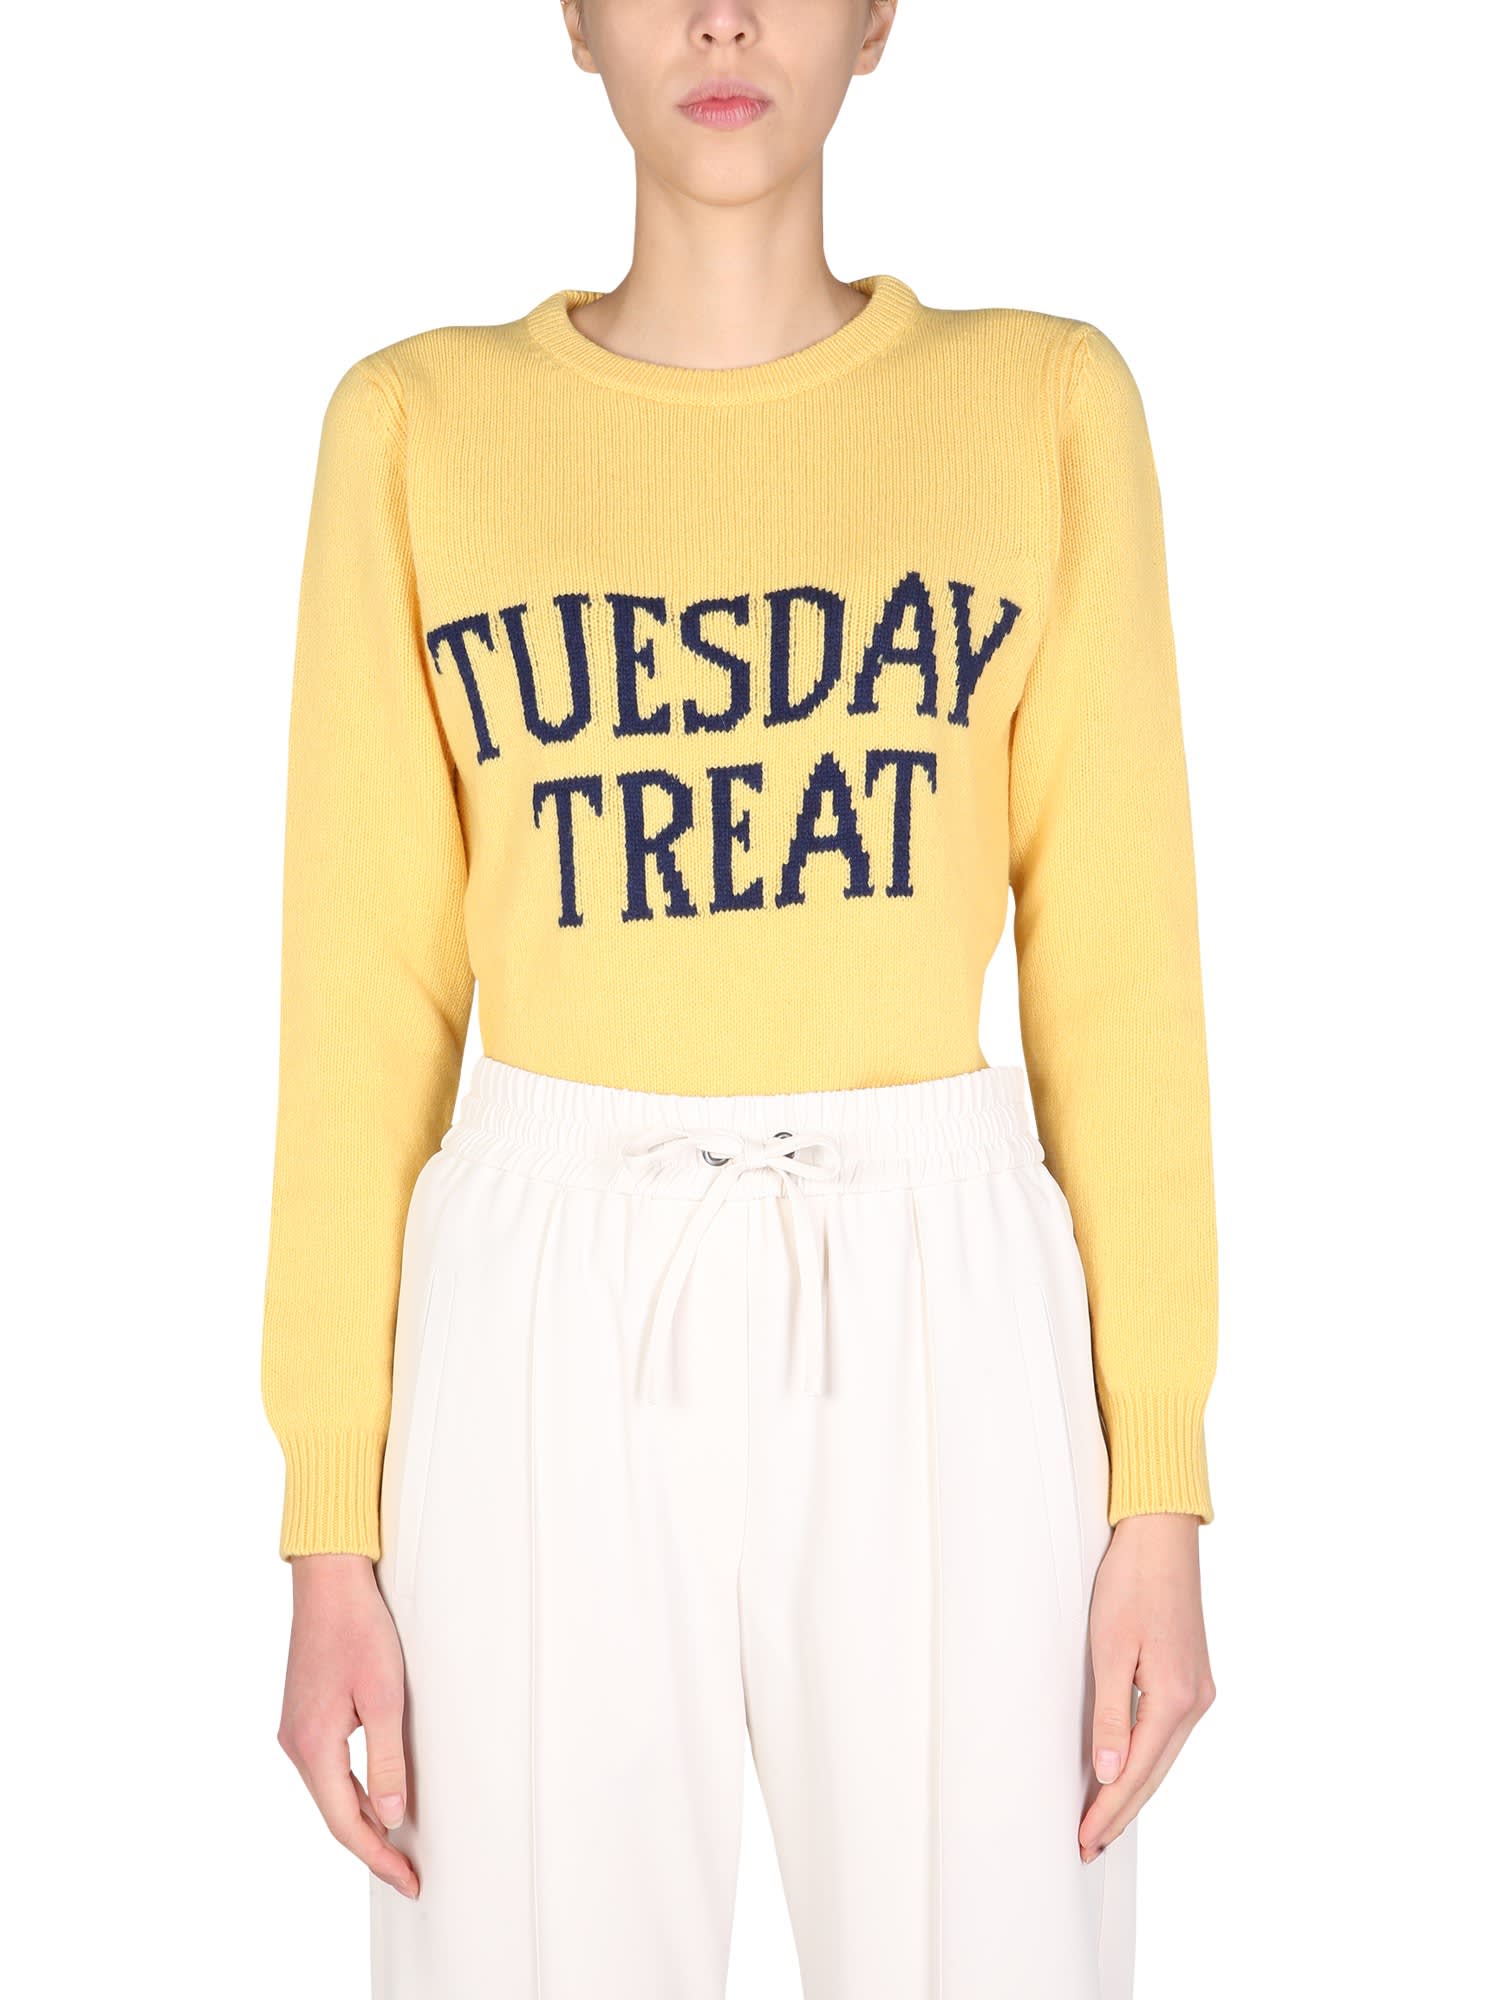 Alberta Ferretti Tuesday Treat Sweater